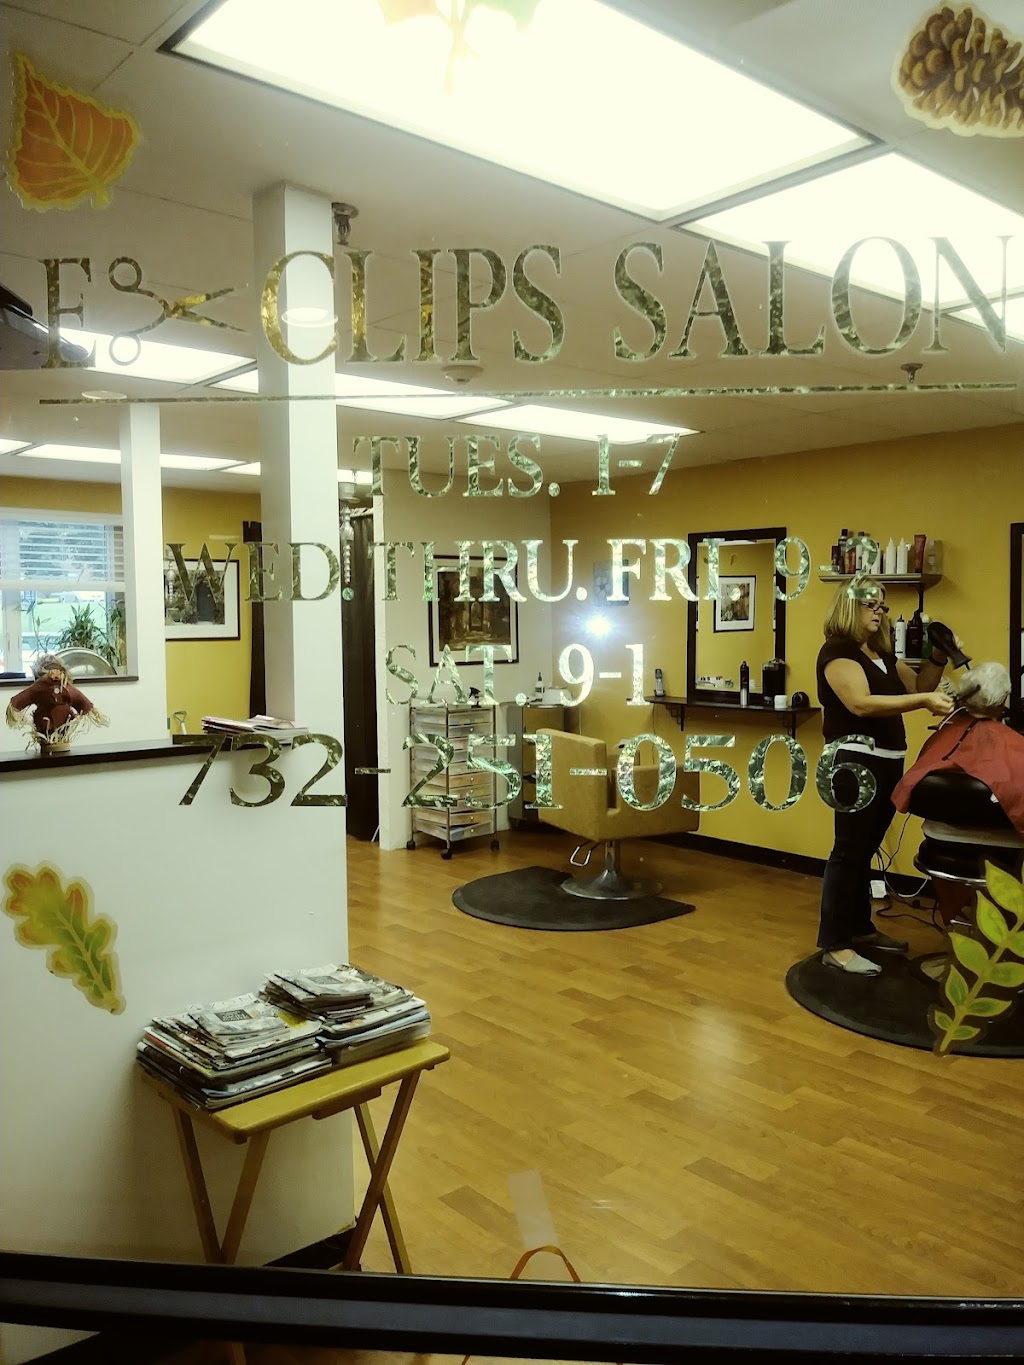 E-Clips Hair Salon | 250 Crescent Ave, Spotswood, NJ 08884 | Phone: (732) 251-0506